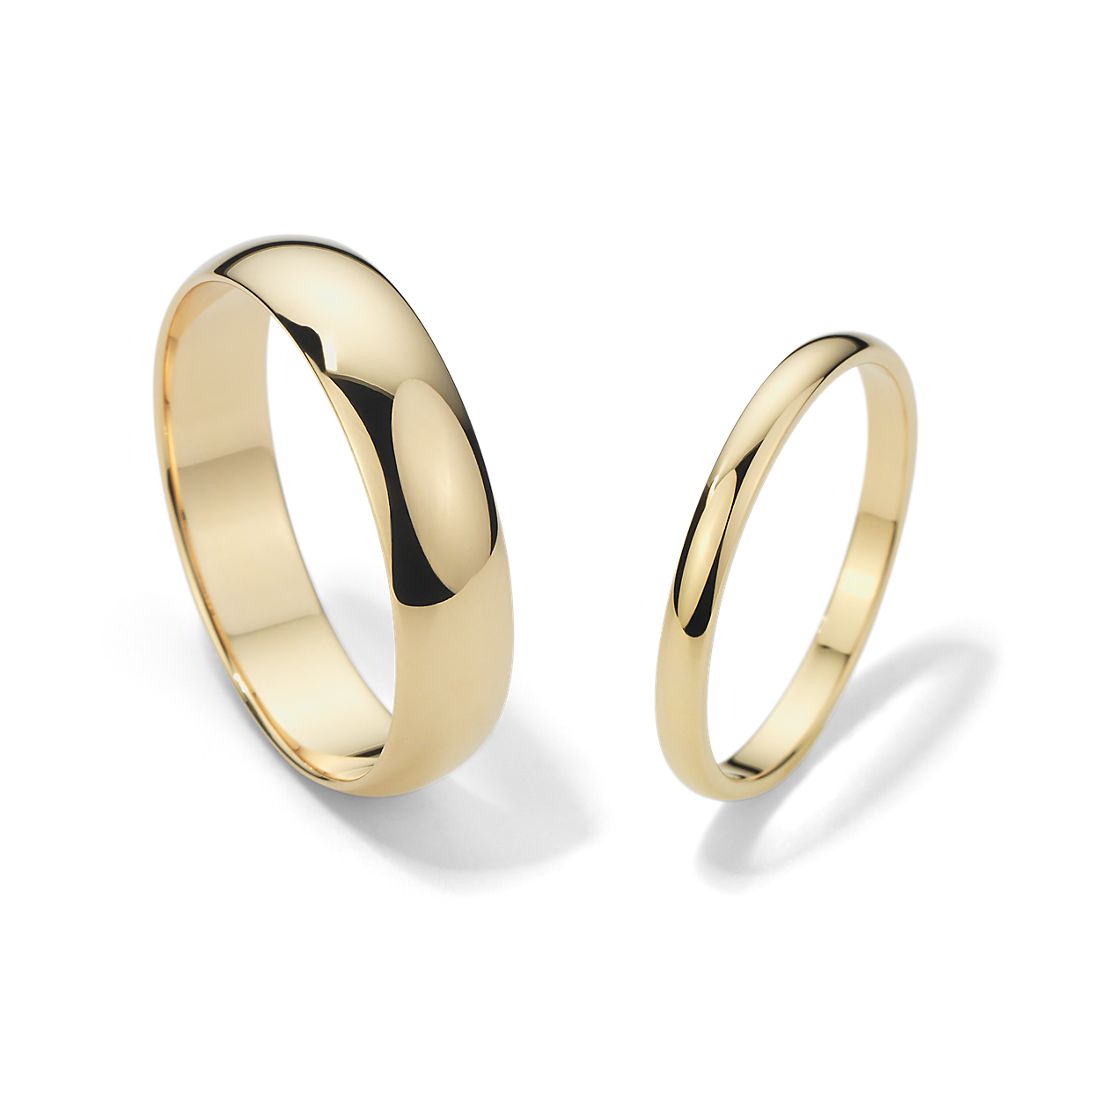 Reizen Voorkomen Verminderen Classic Wedding Ring Set in 14k Yellow Gold | Blue Nile